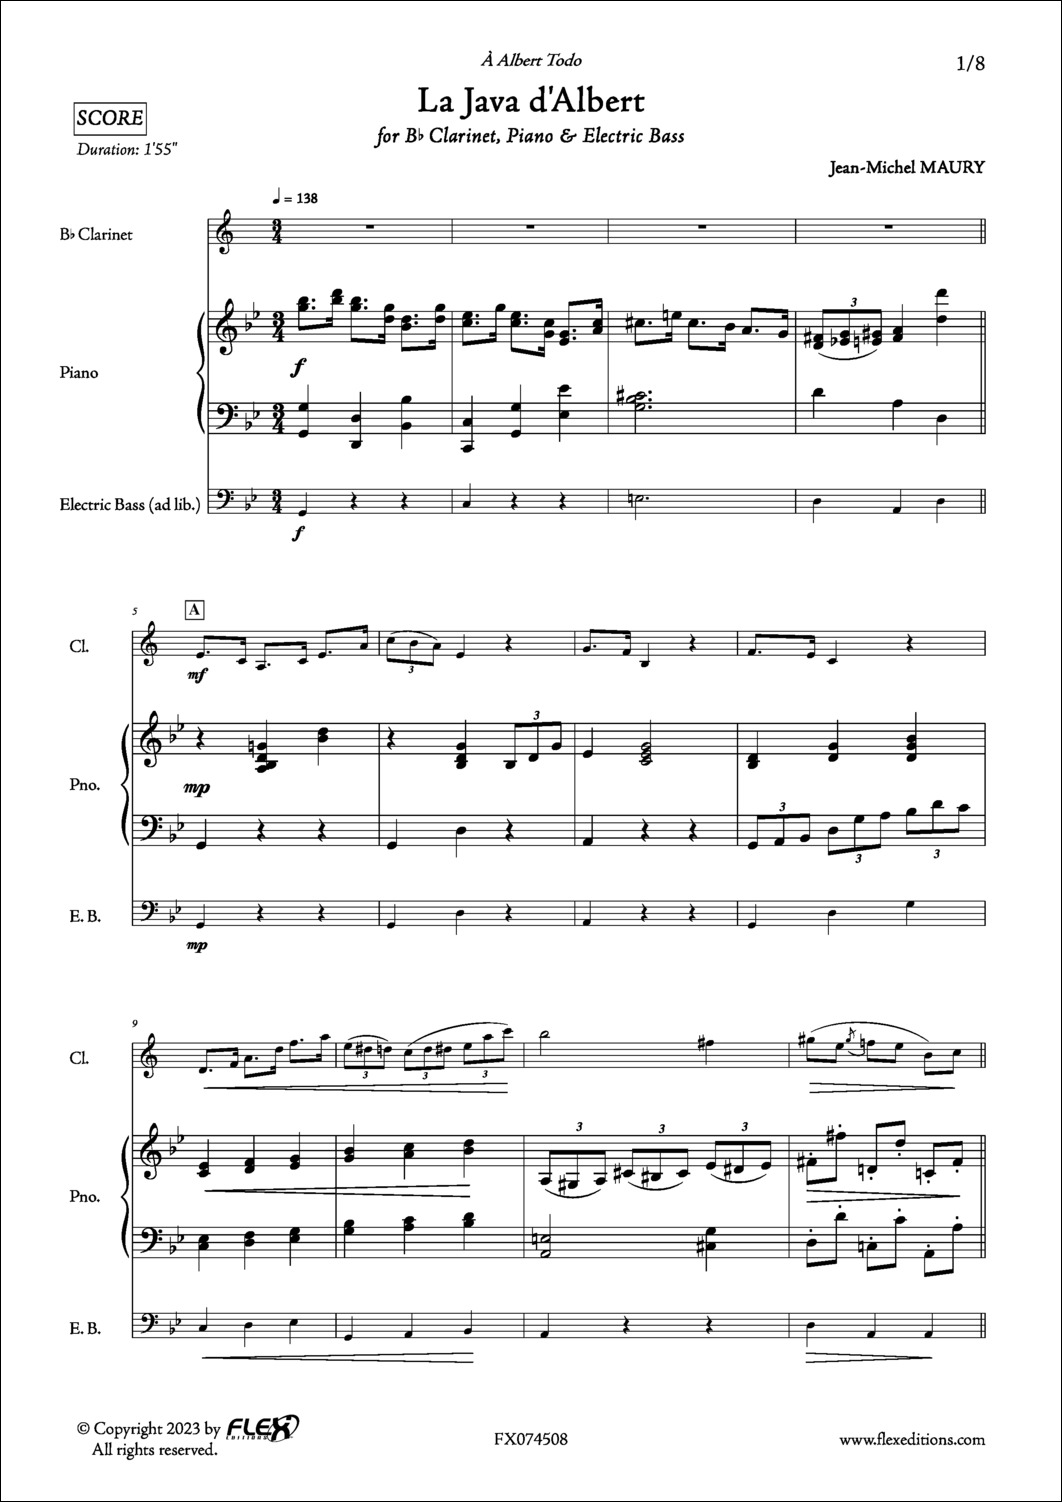 La Java d'Albert - J.-M. MAURY - <font color=#666666>Clarinet, Piano and Electric Bass (opt.)</font>